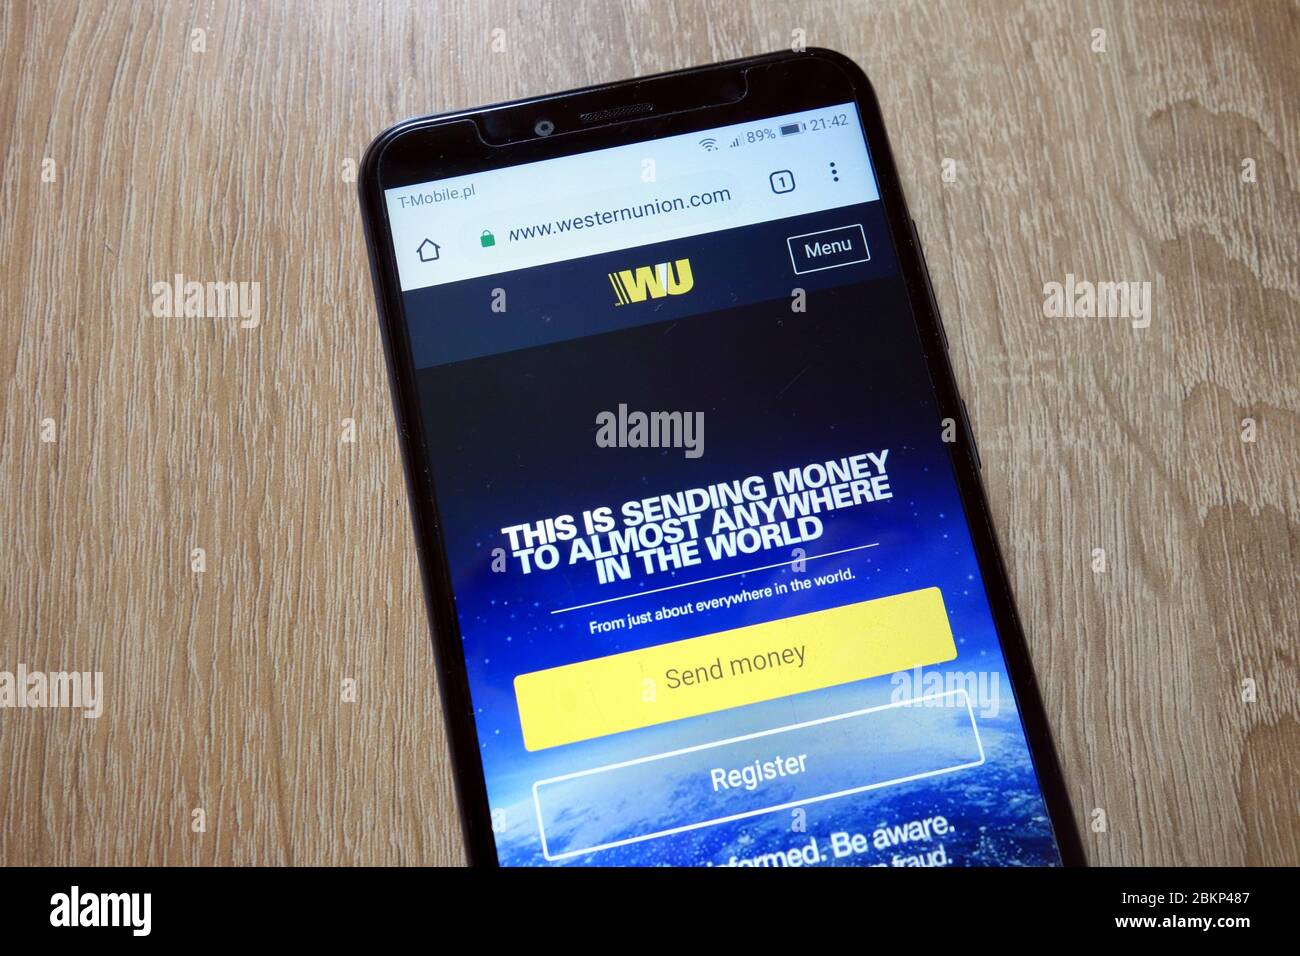 Western Union website (www.westernunion.com) displayed on smartphone Stock Photo